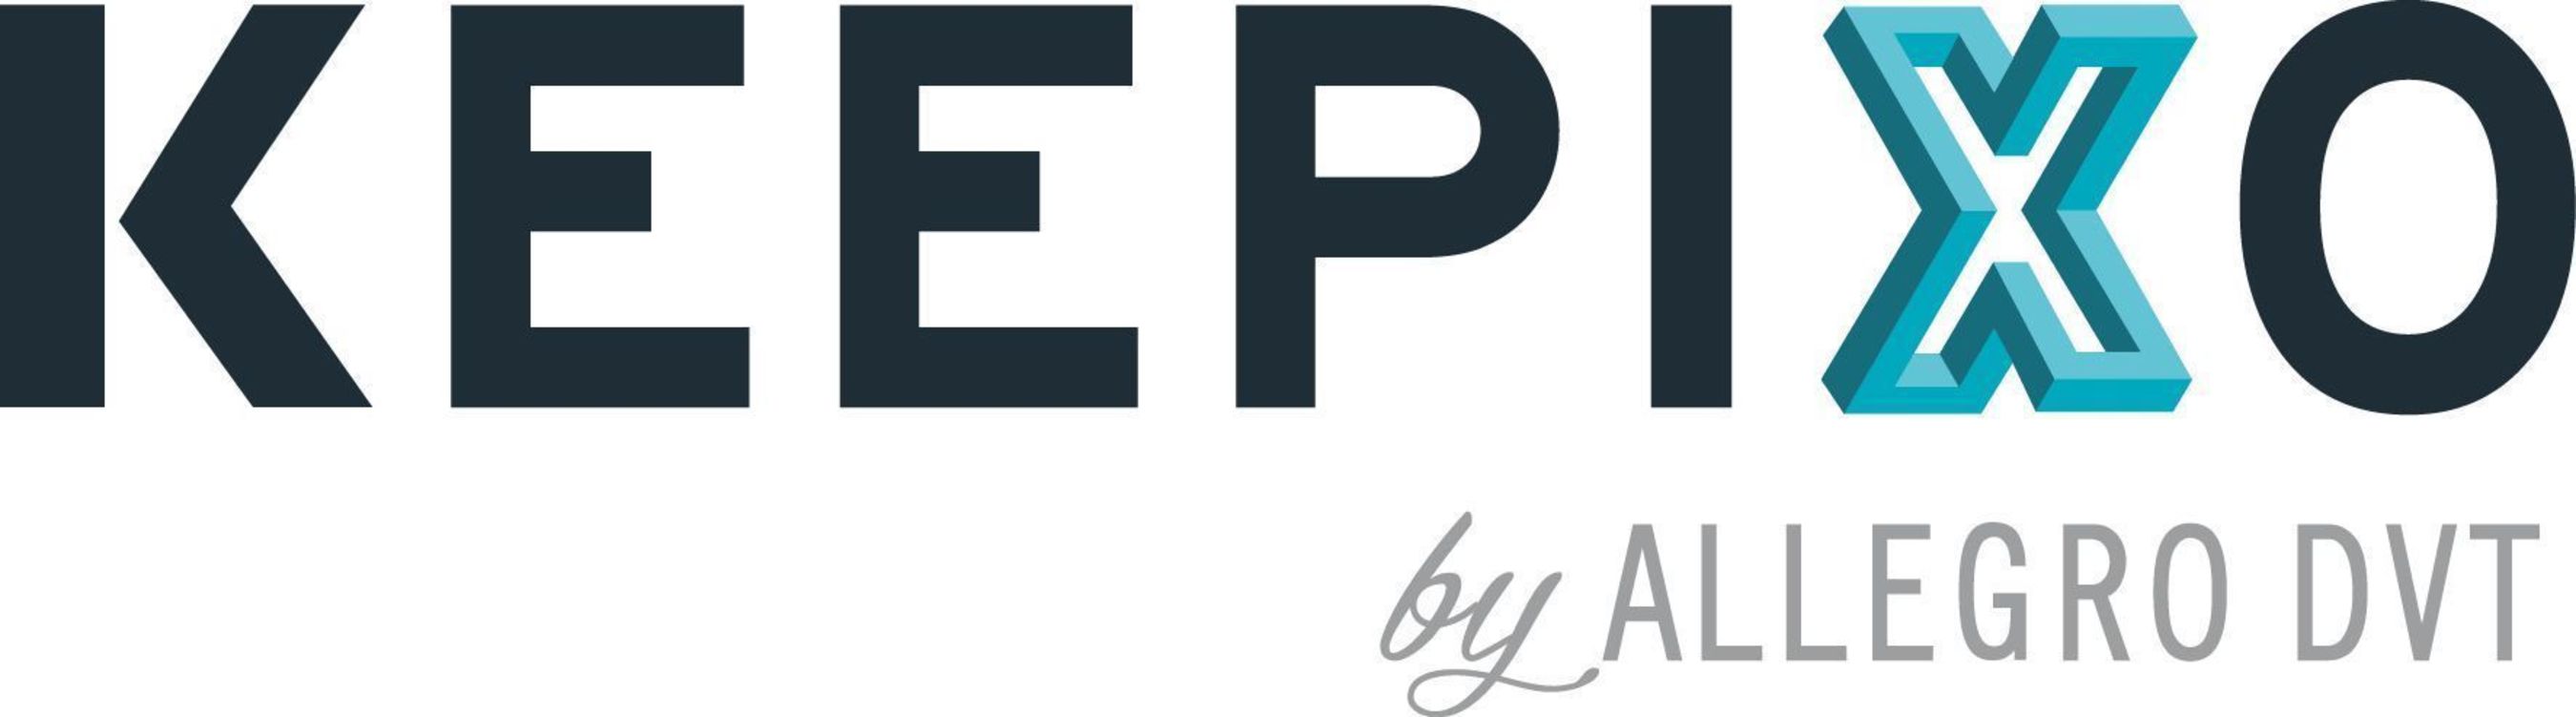 Keepixo Logo (PRNewsFoto/Allegro DVT)